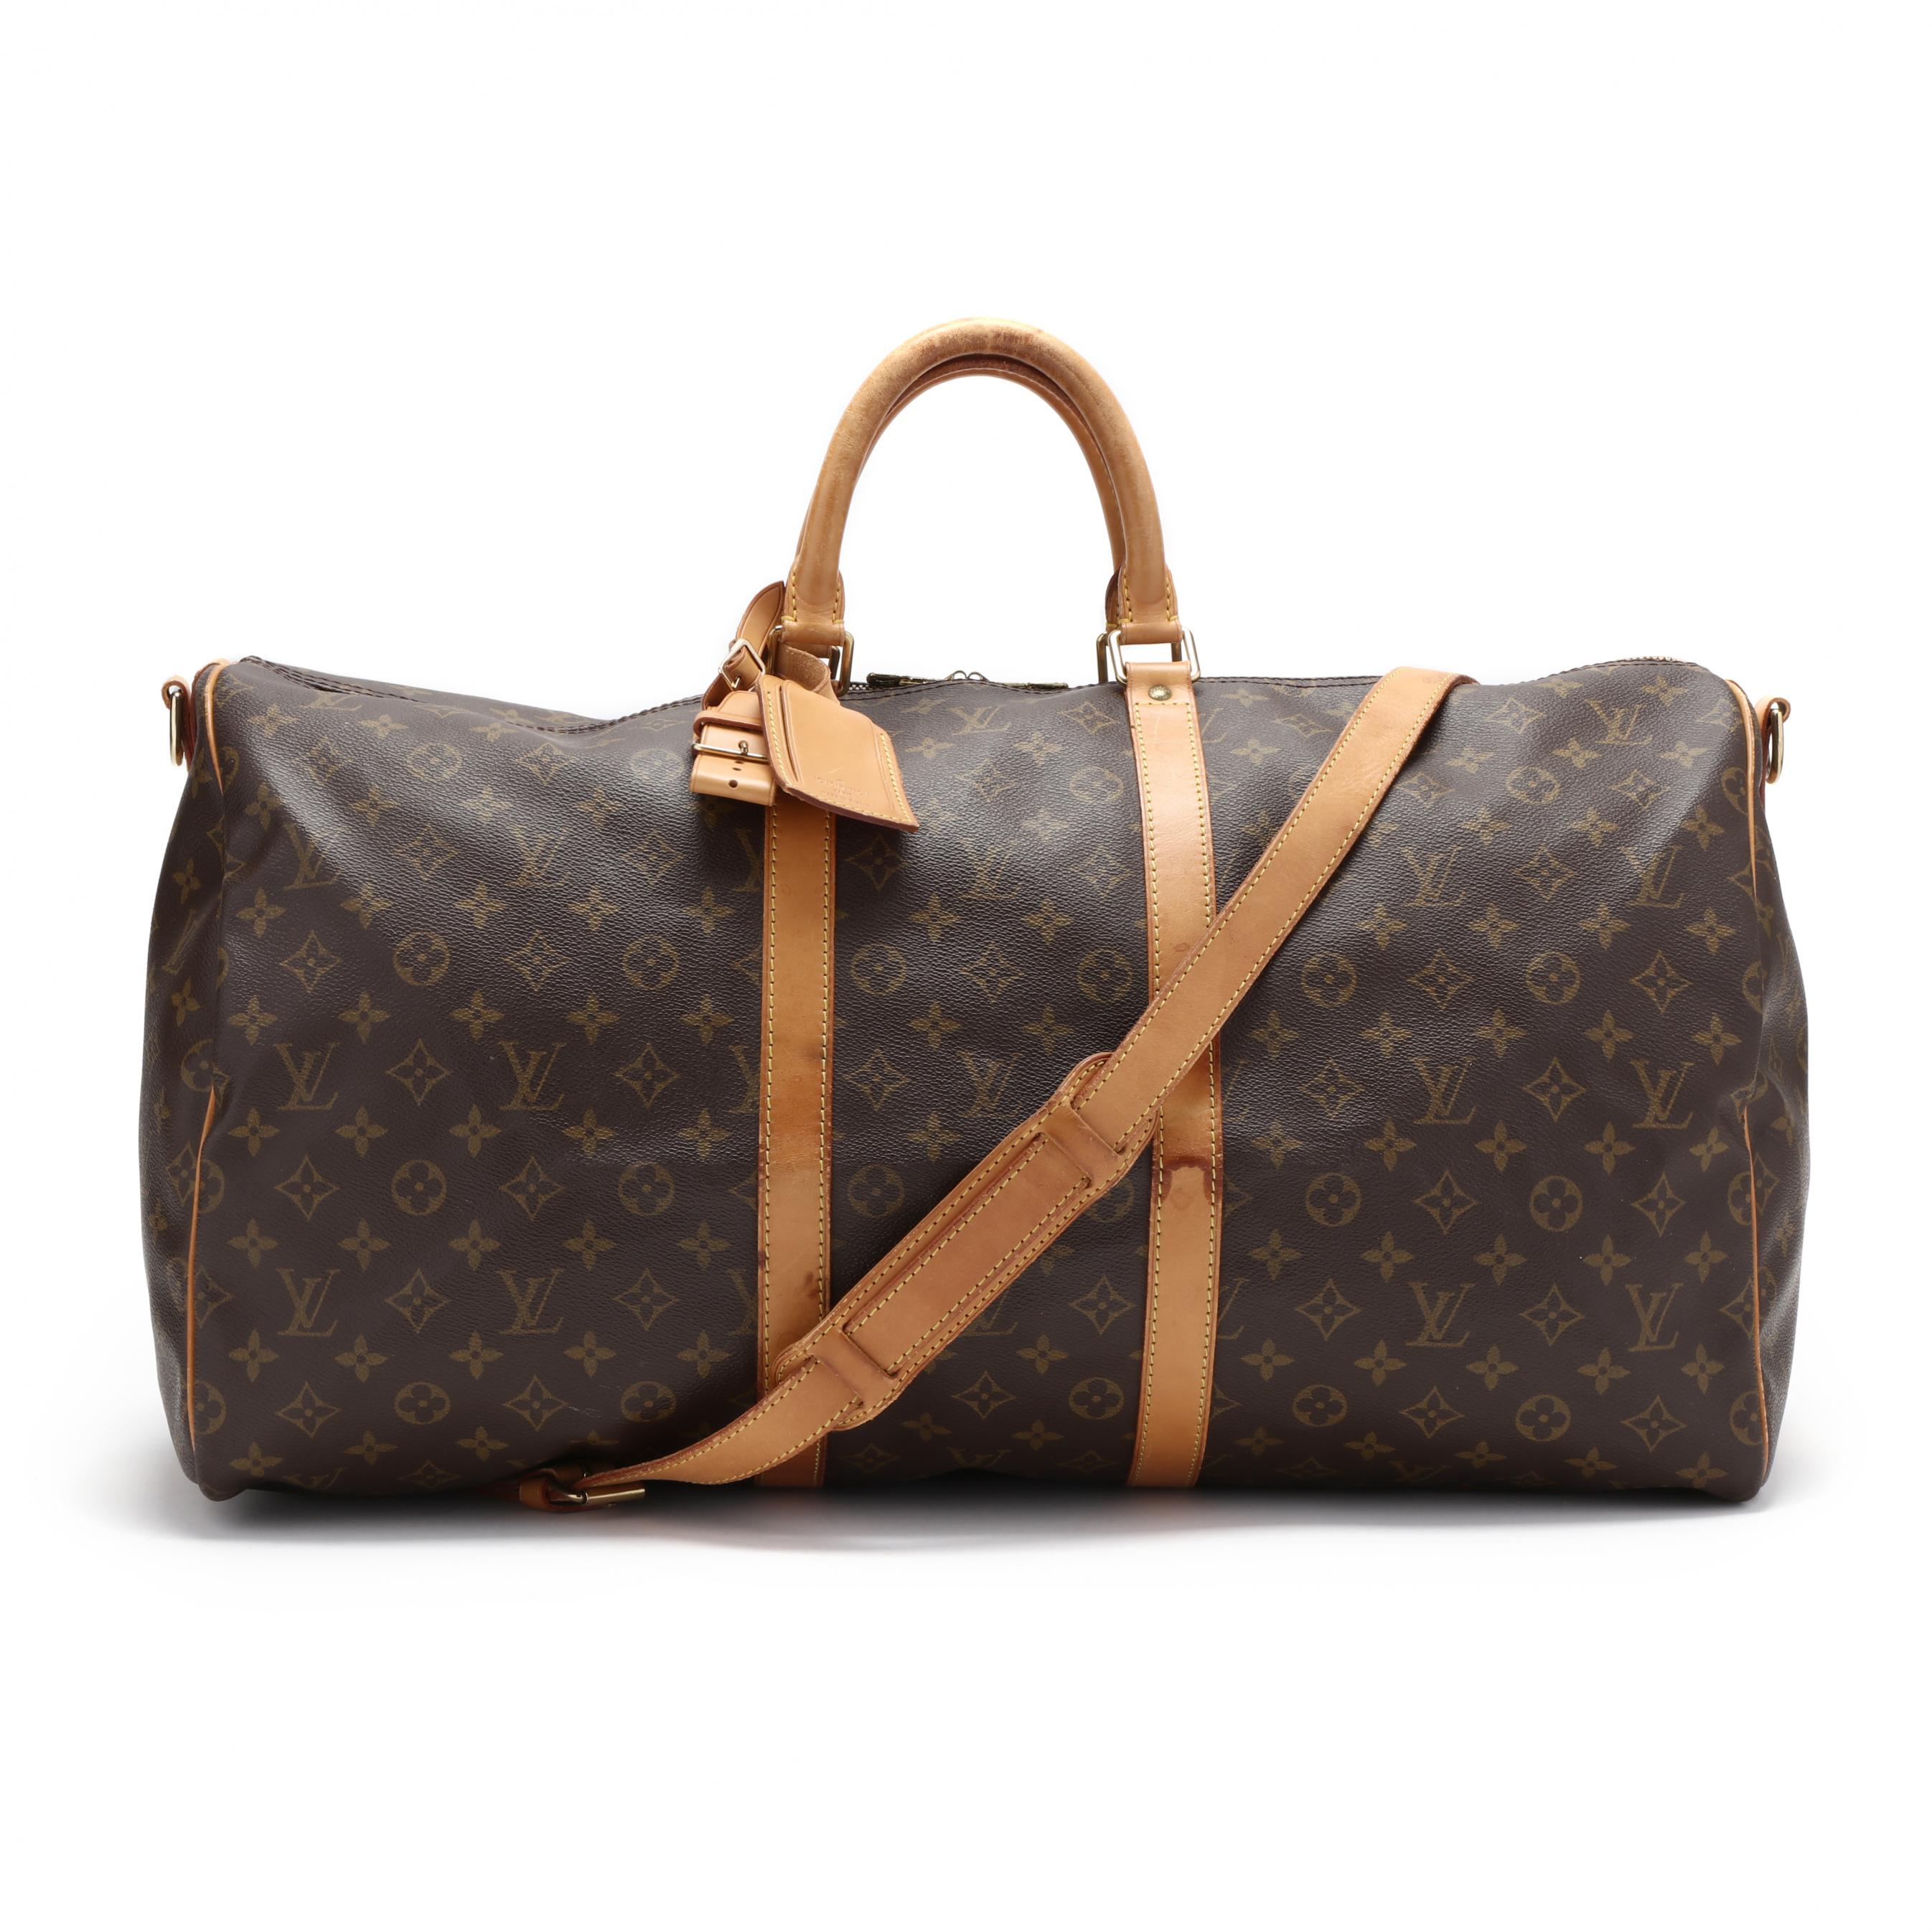 At Auction: Louis Vuitton, LOUIS VUITTON travelling bag, Keepall 55